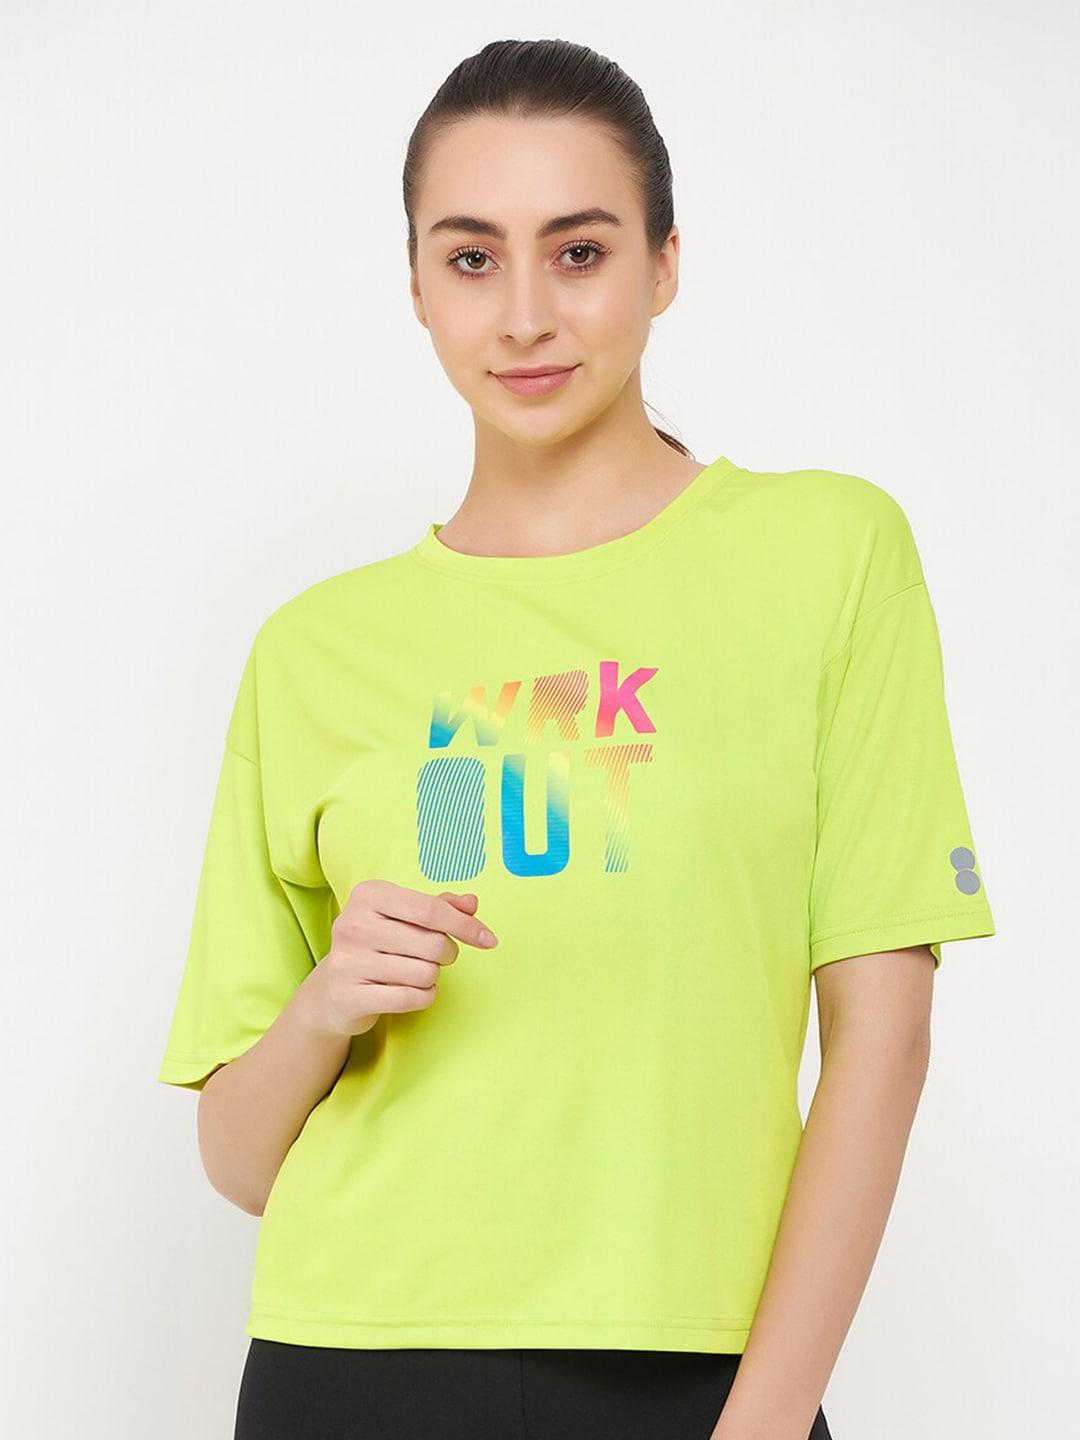 clovia women typography t-shirt